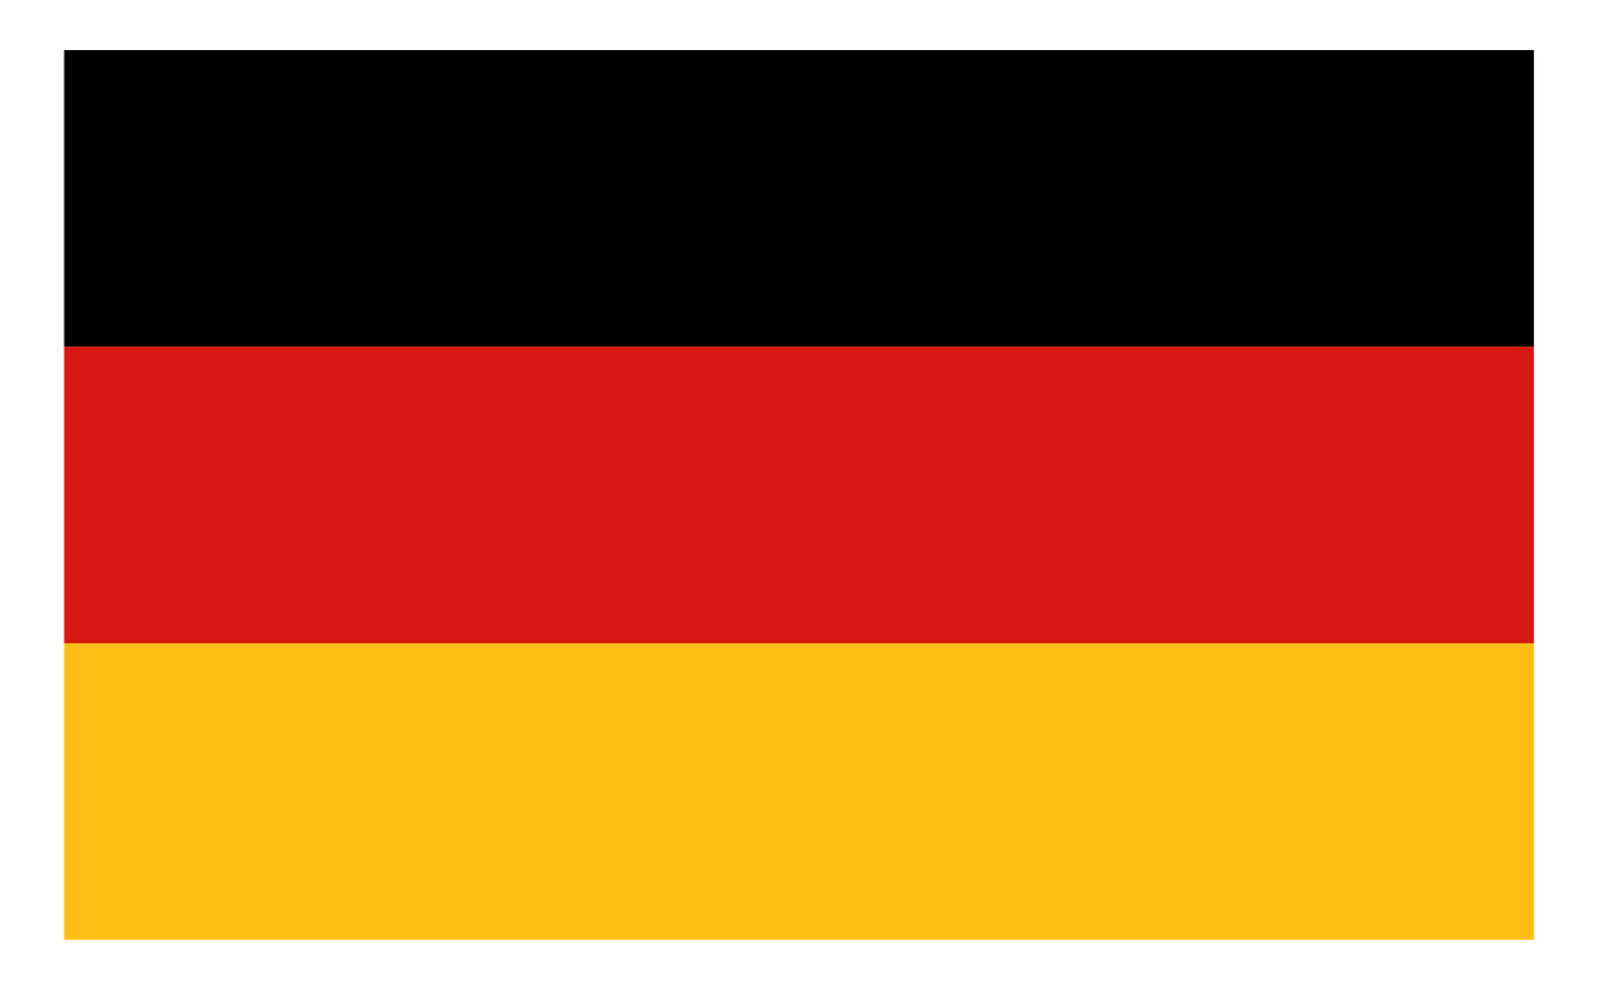 German flag clipart free